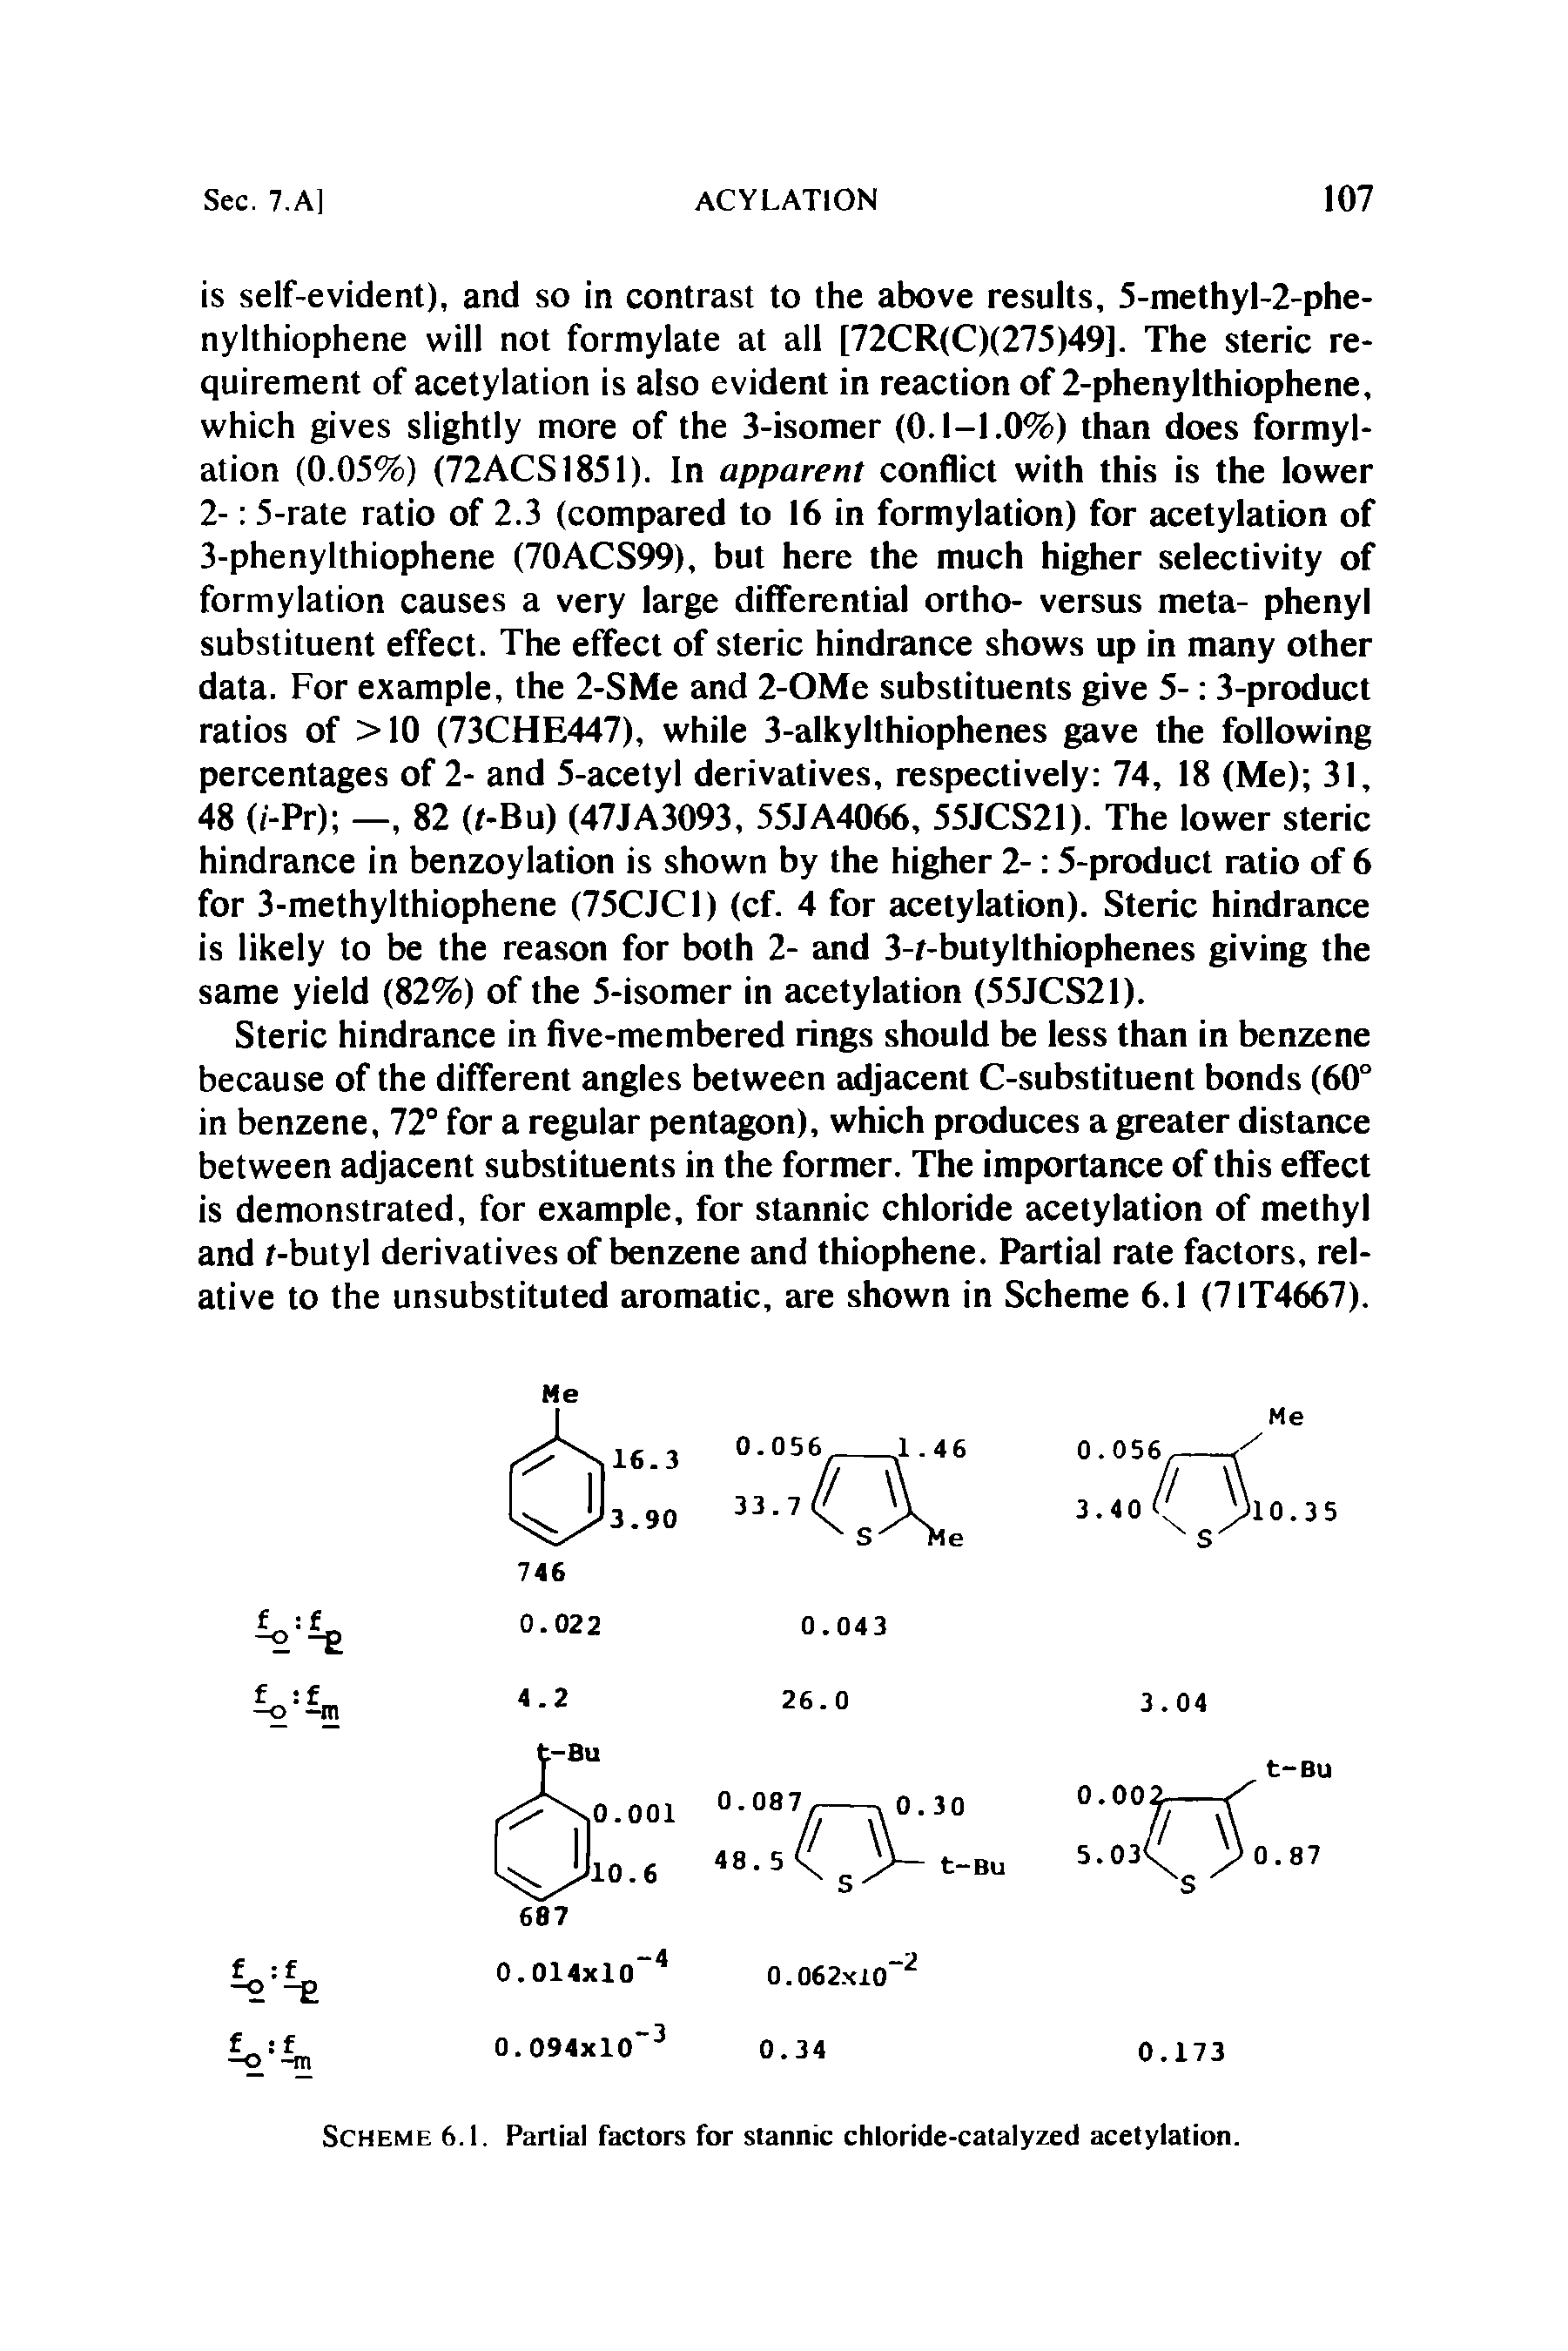 Scheme 6.1. Partial factors for stannic chloride-catalyzed acetylation.